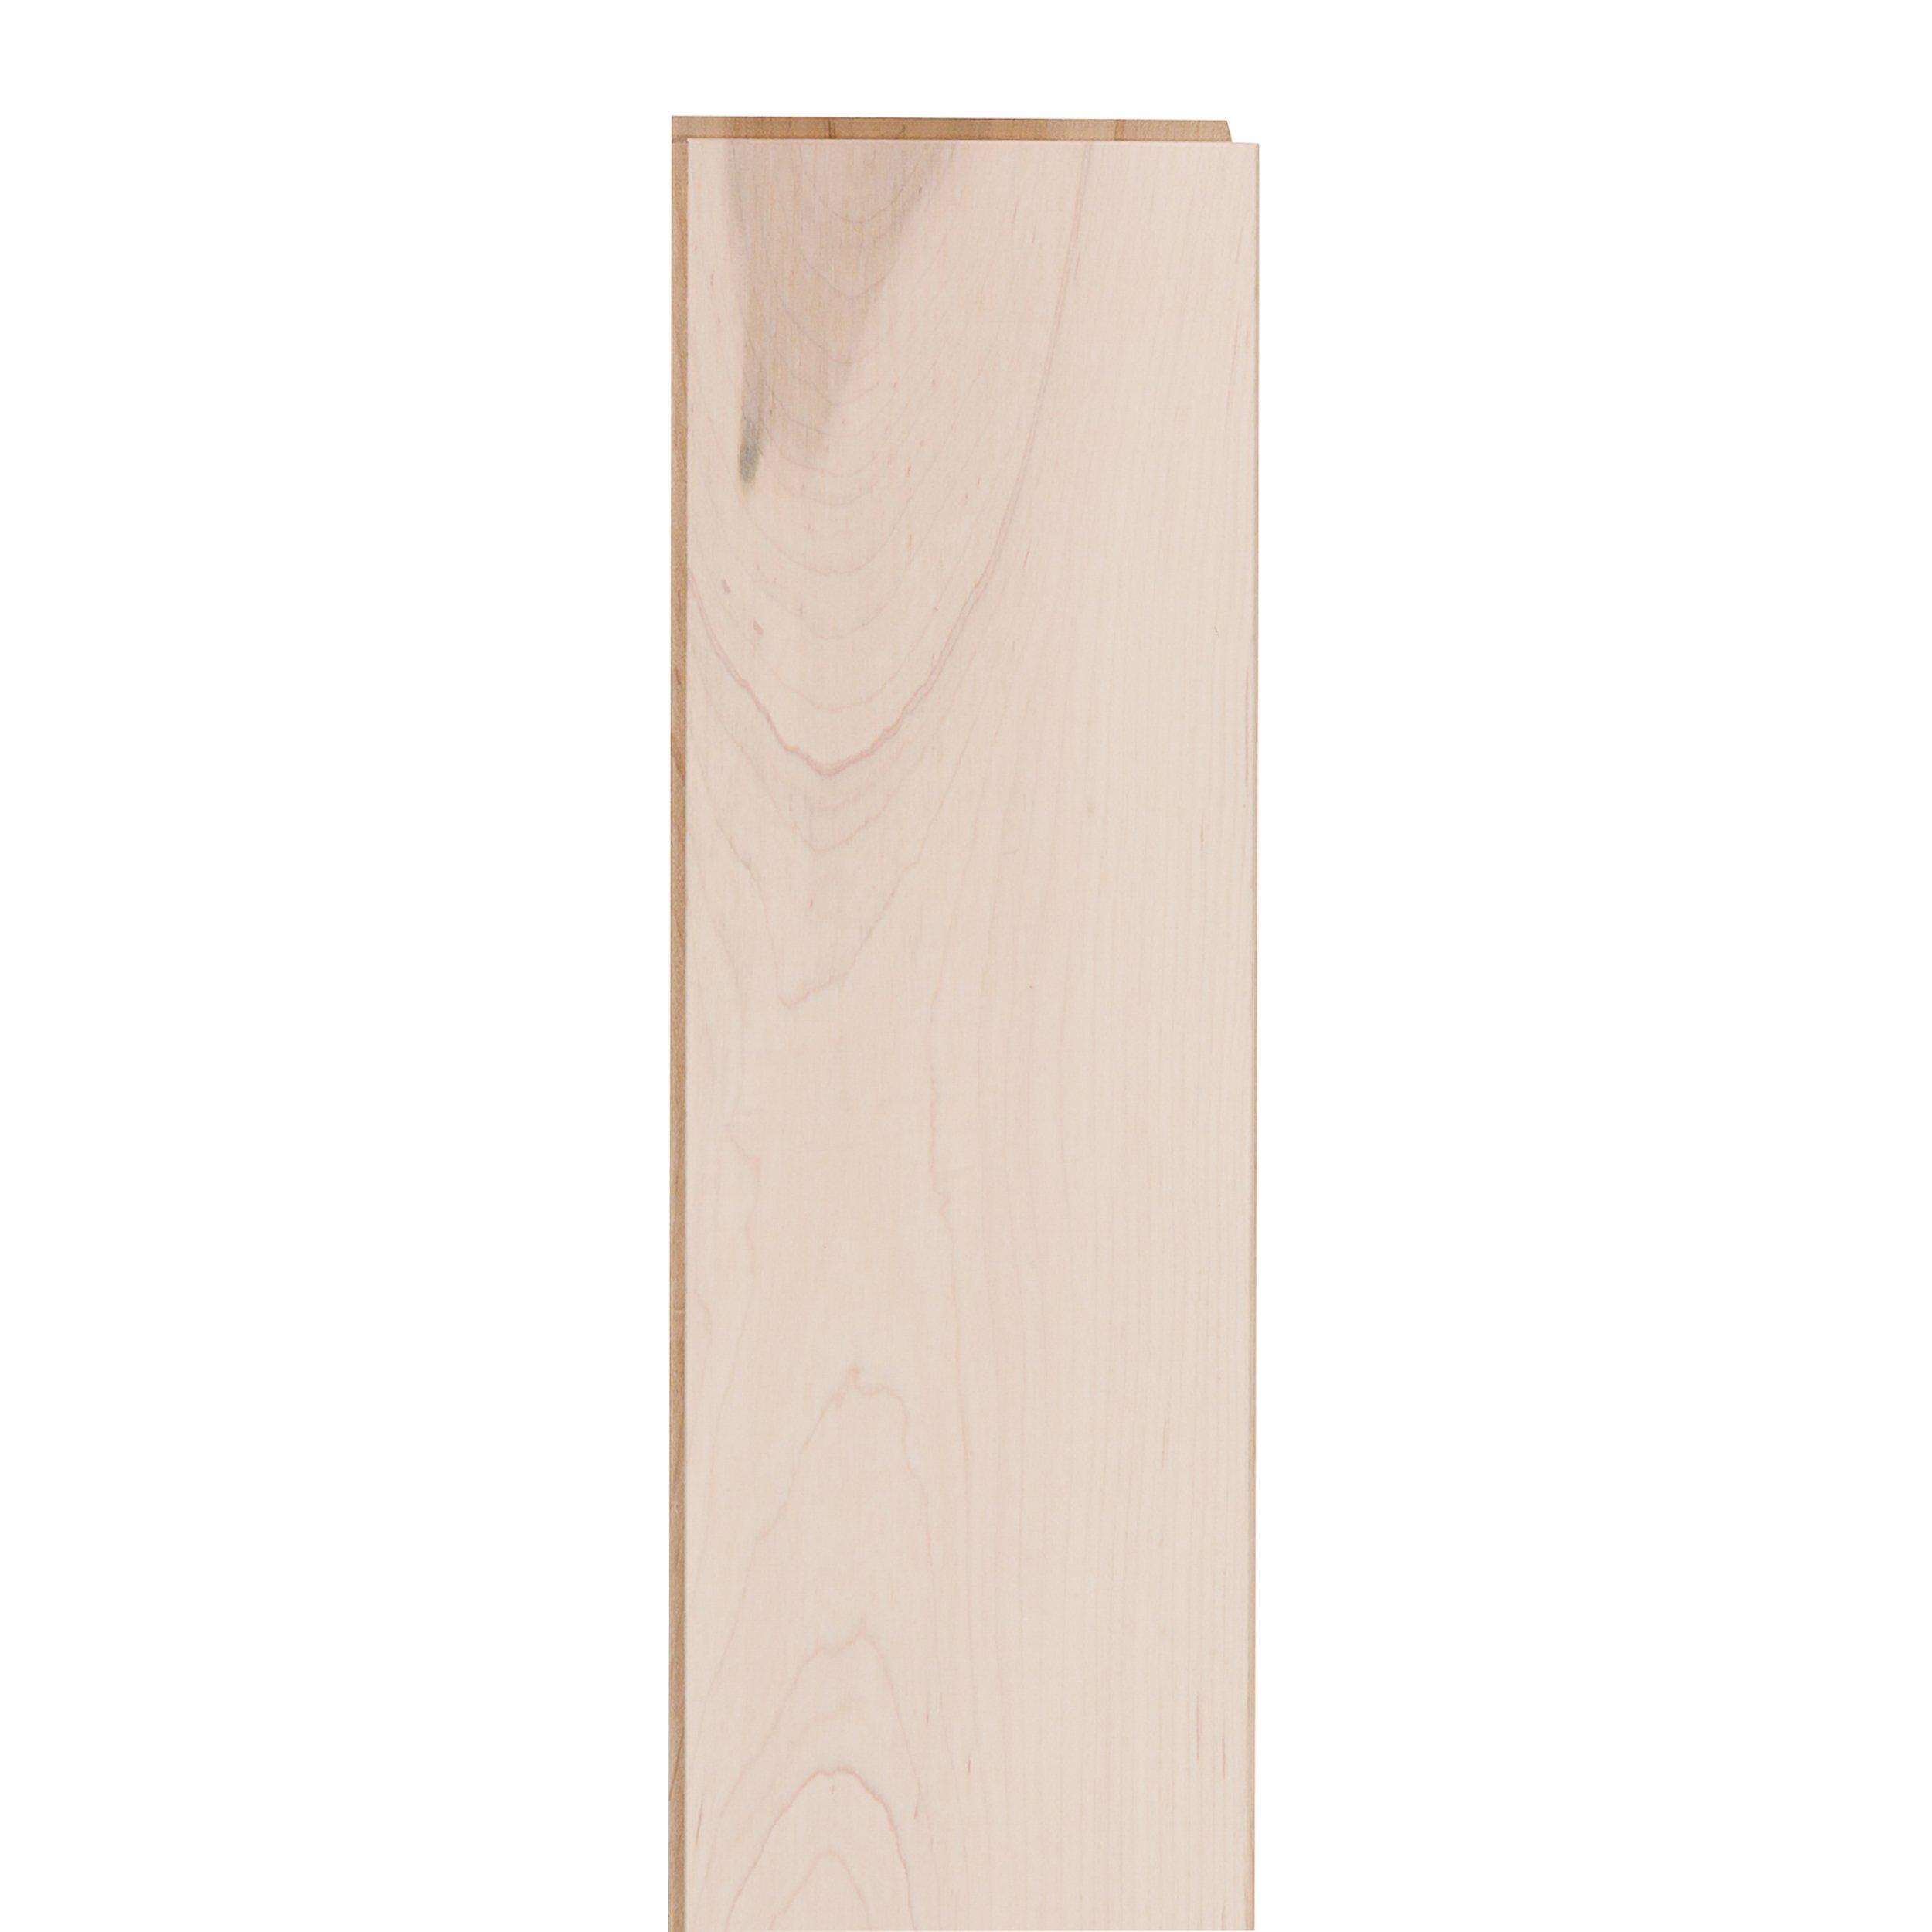 Evian Hard Maple Smooth Solid Hardwood